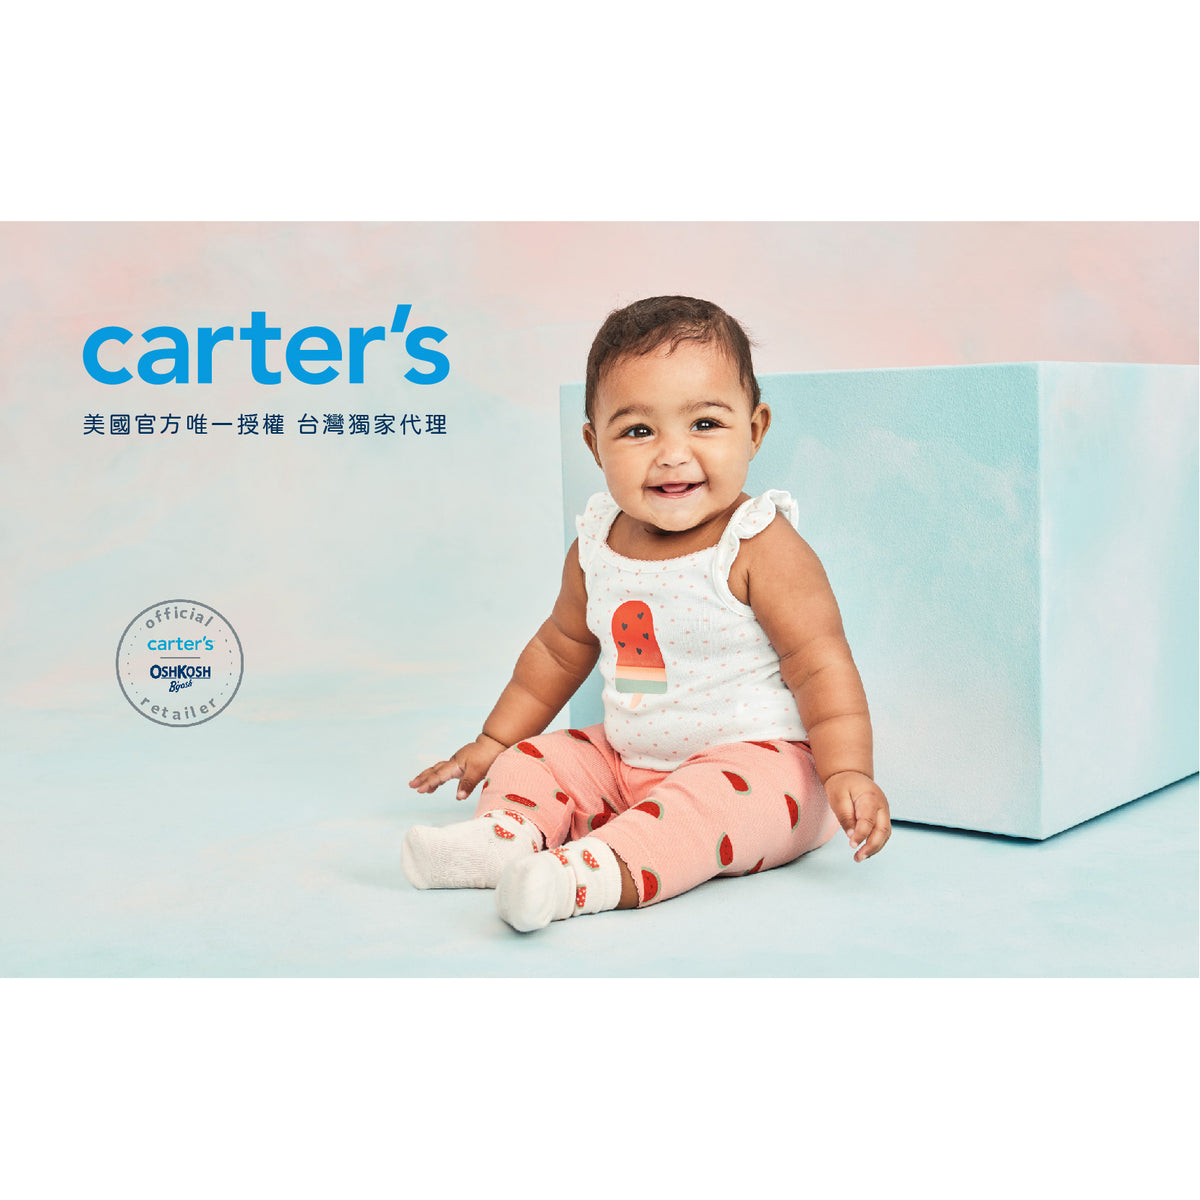 Carter's 櫻桃甜心2件組套裝(6M-24M)